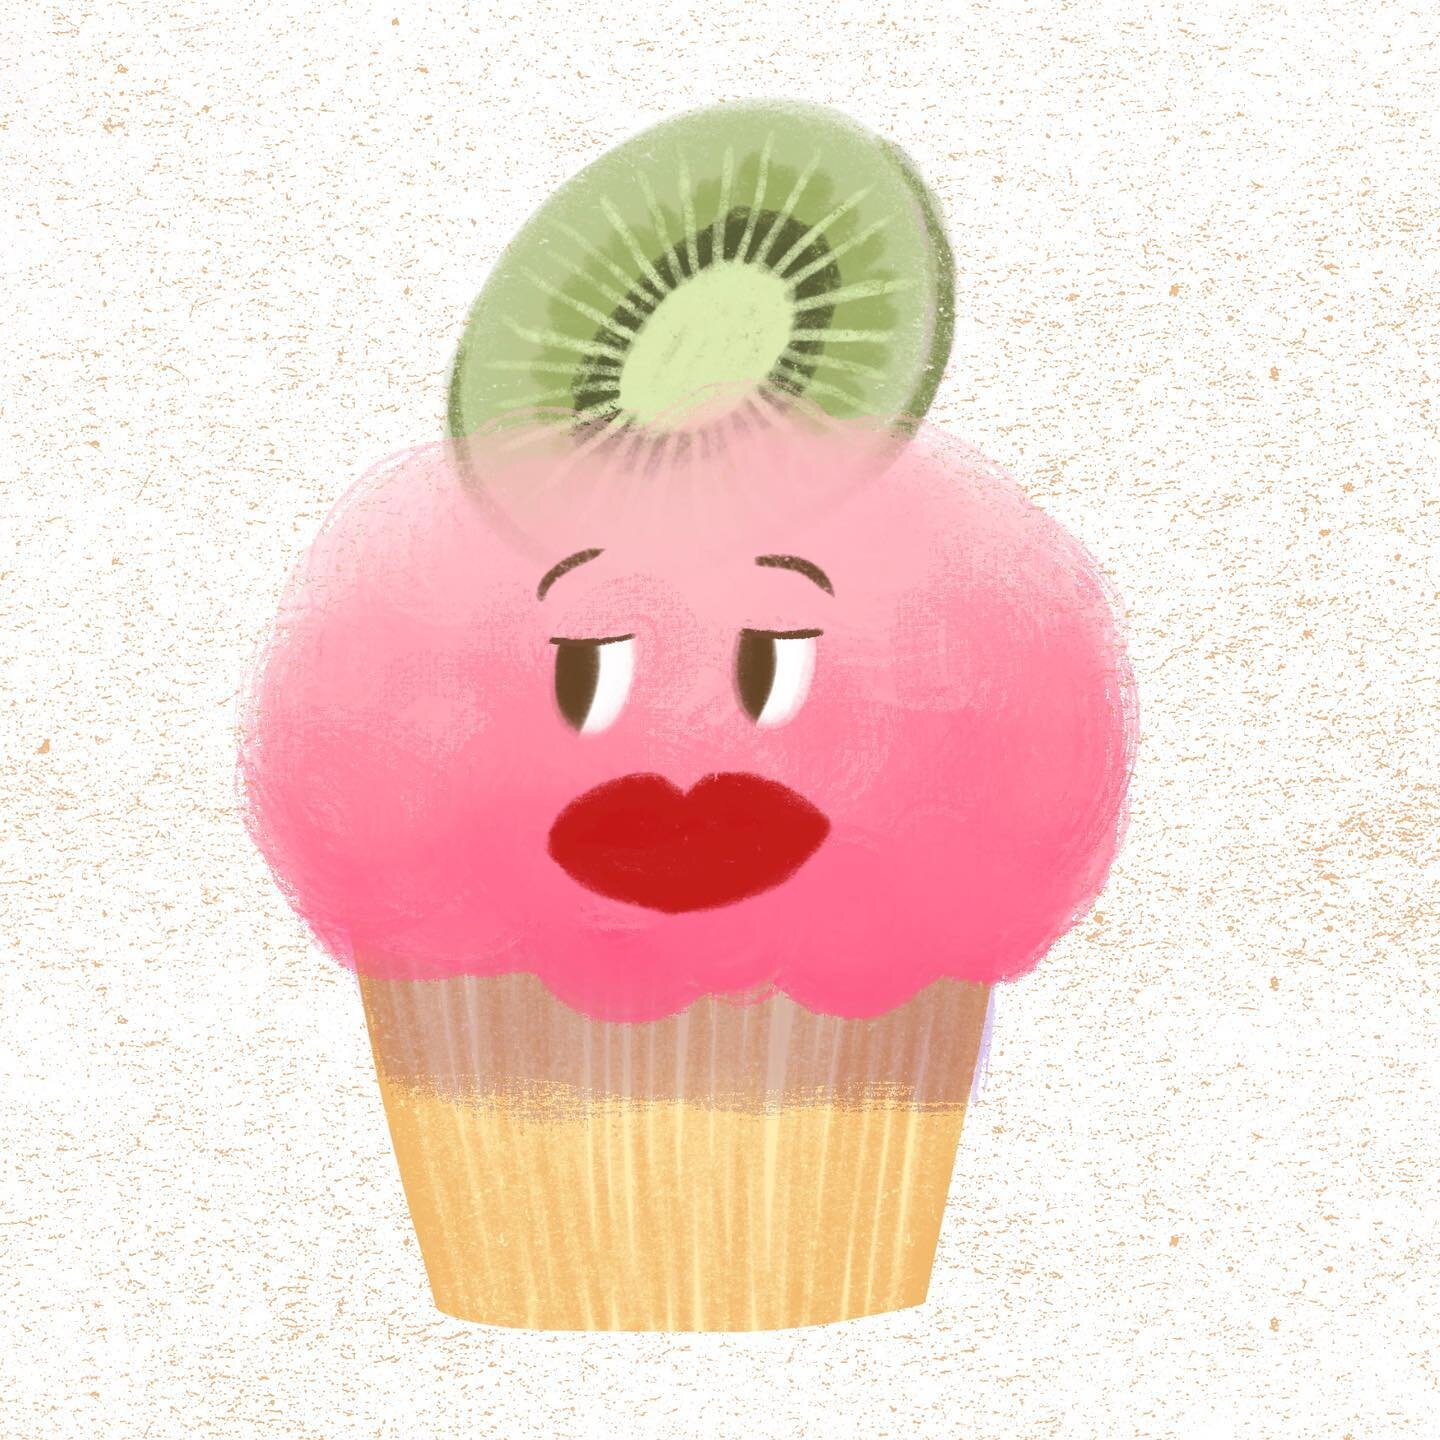 Kiwi #cupcake #matsprep